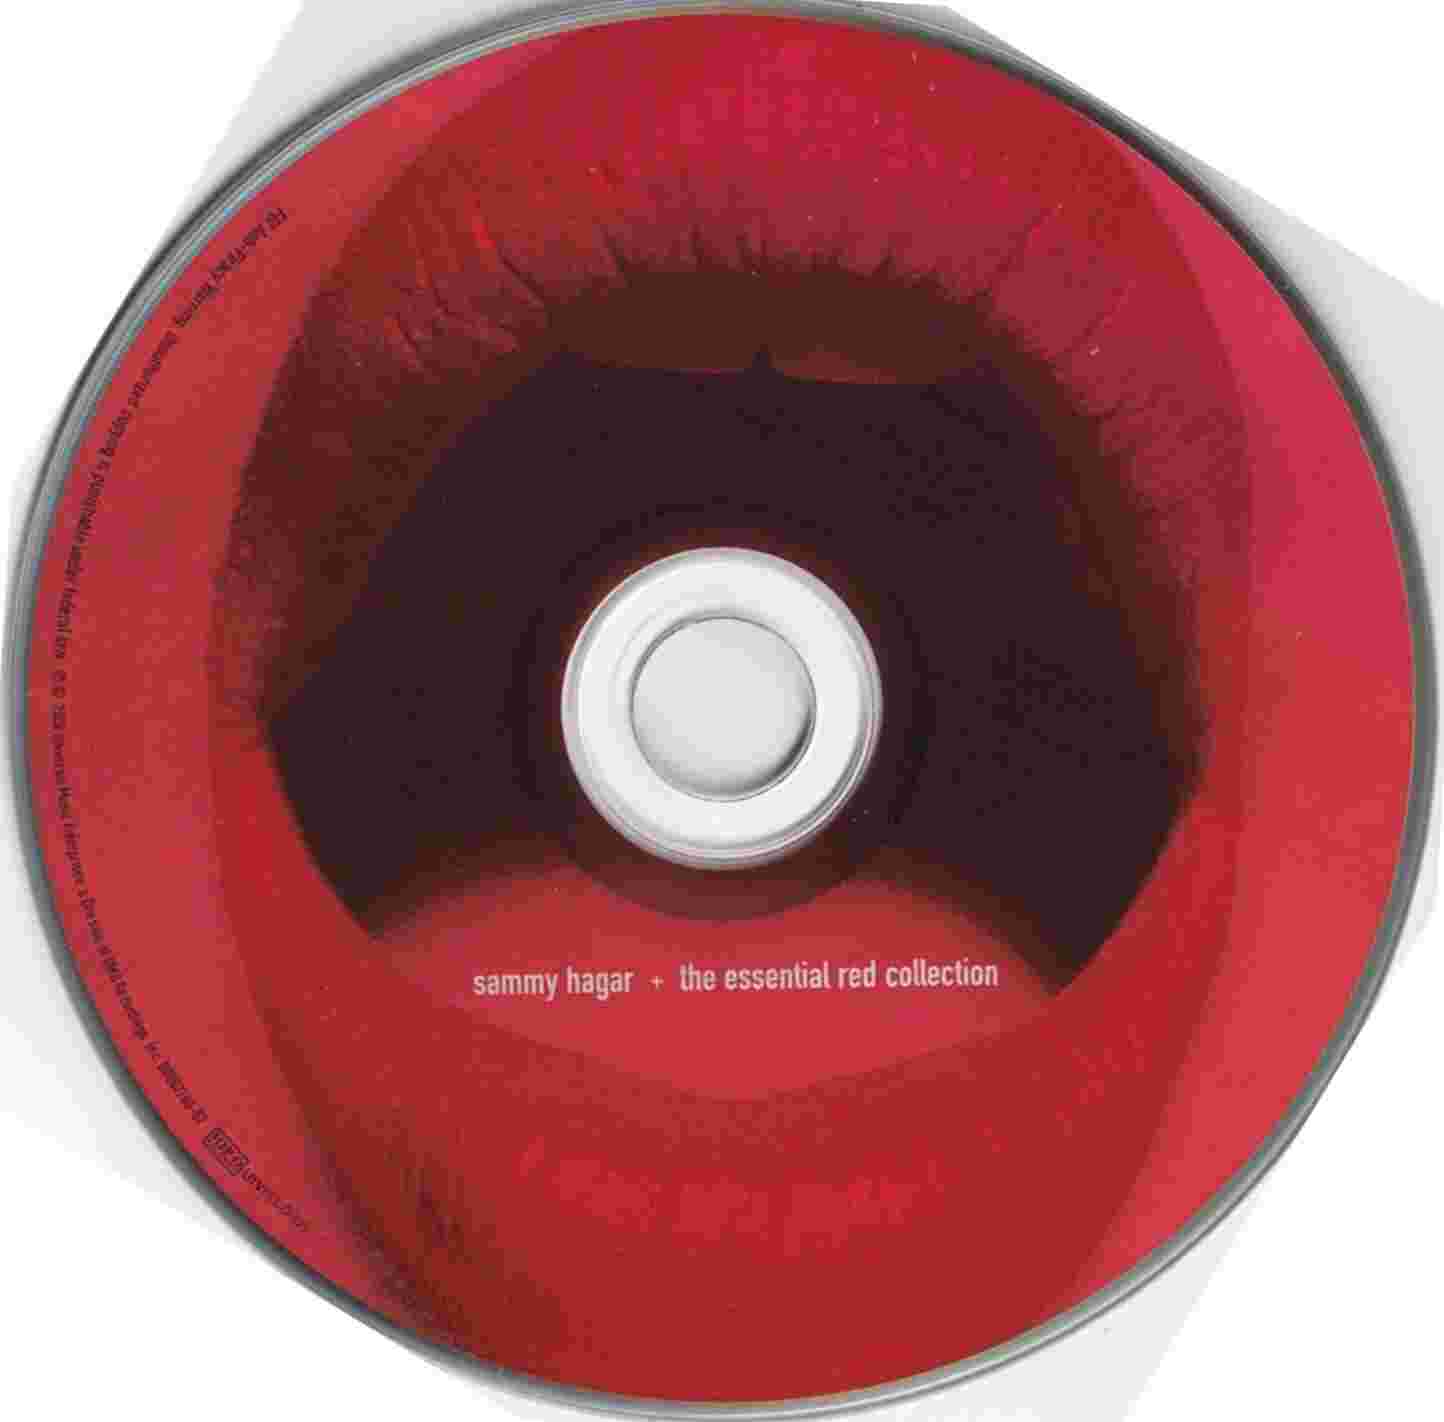 Sammy Hagar The Essential Red Collection (2004) : CD.